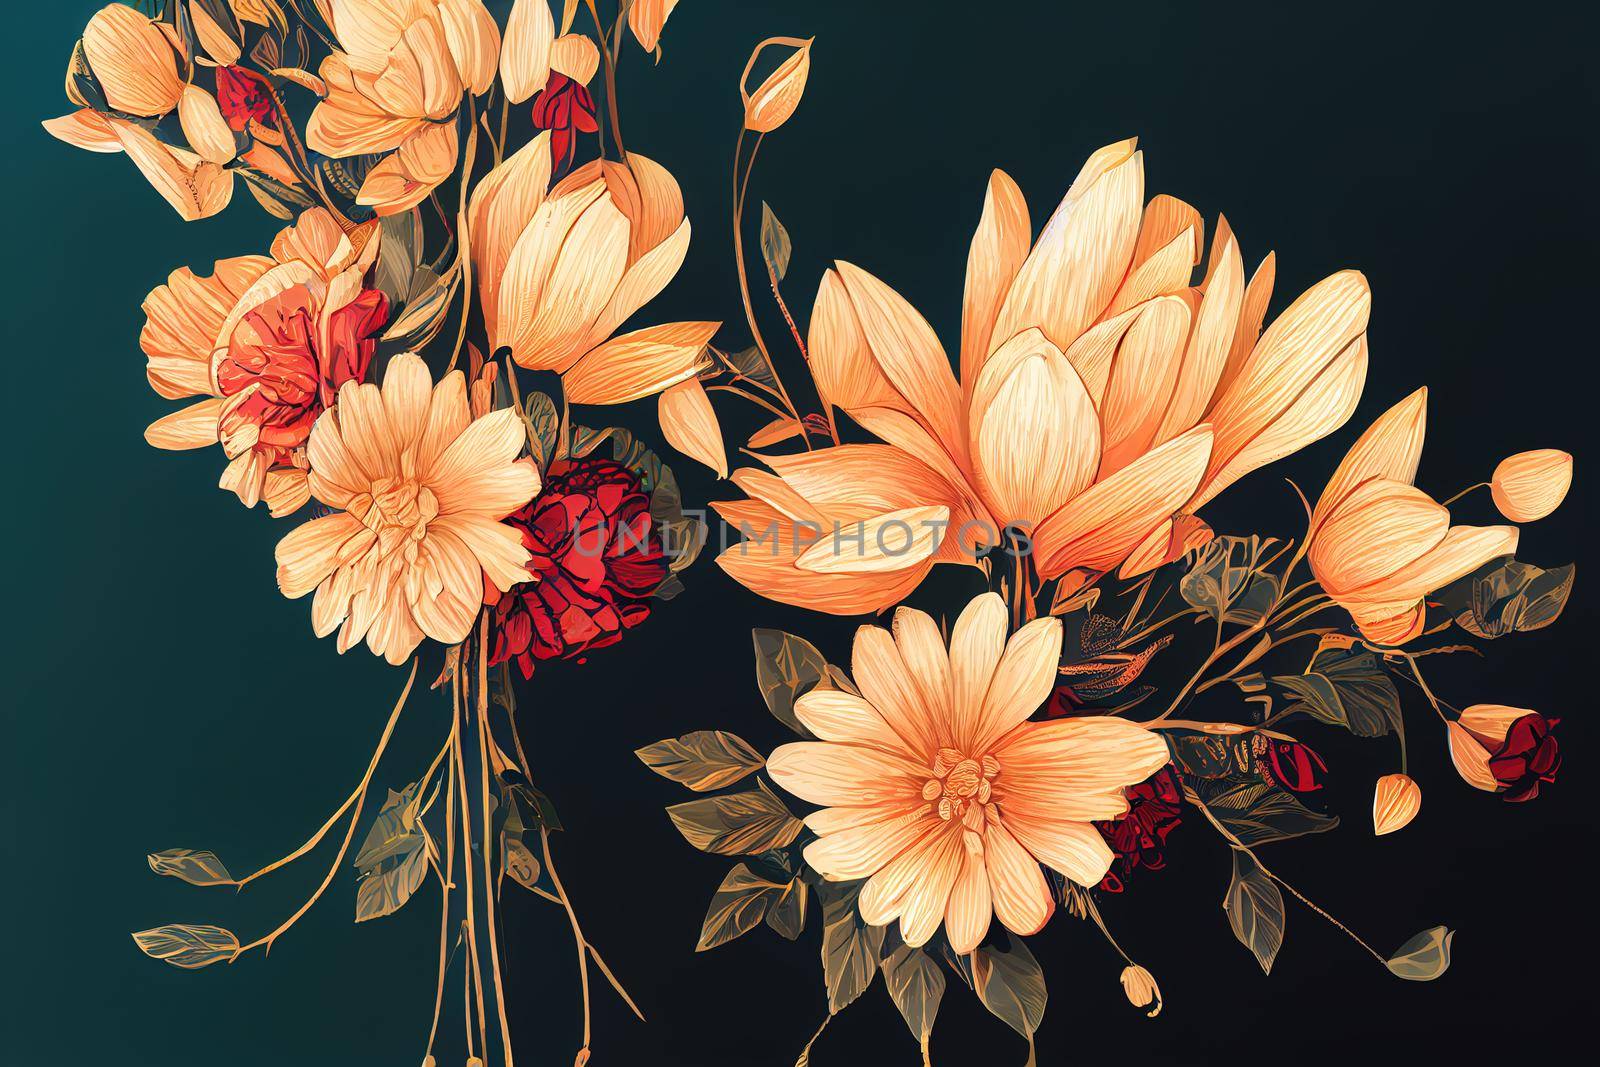 flower bouquet folk style. High quality 3d illustration